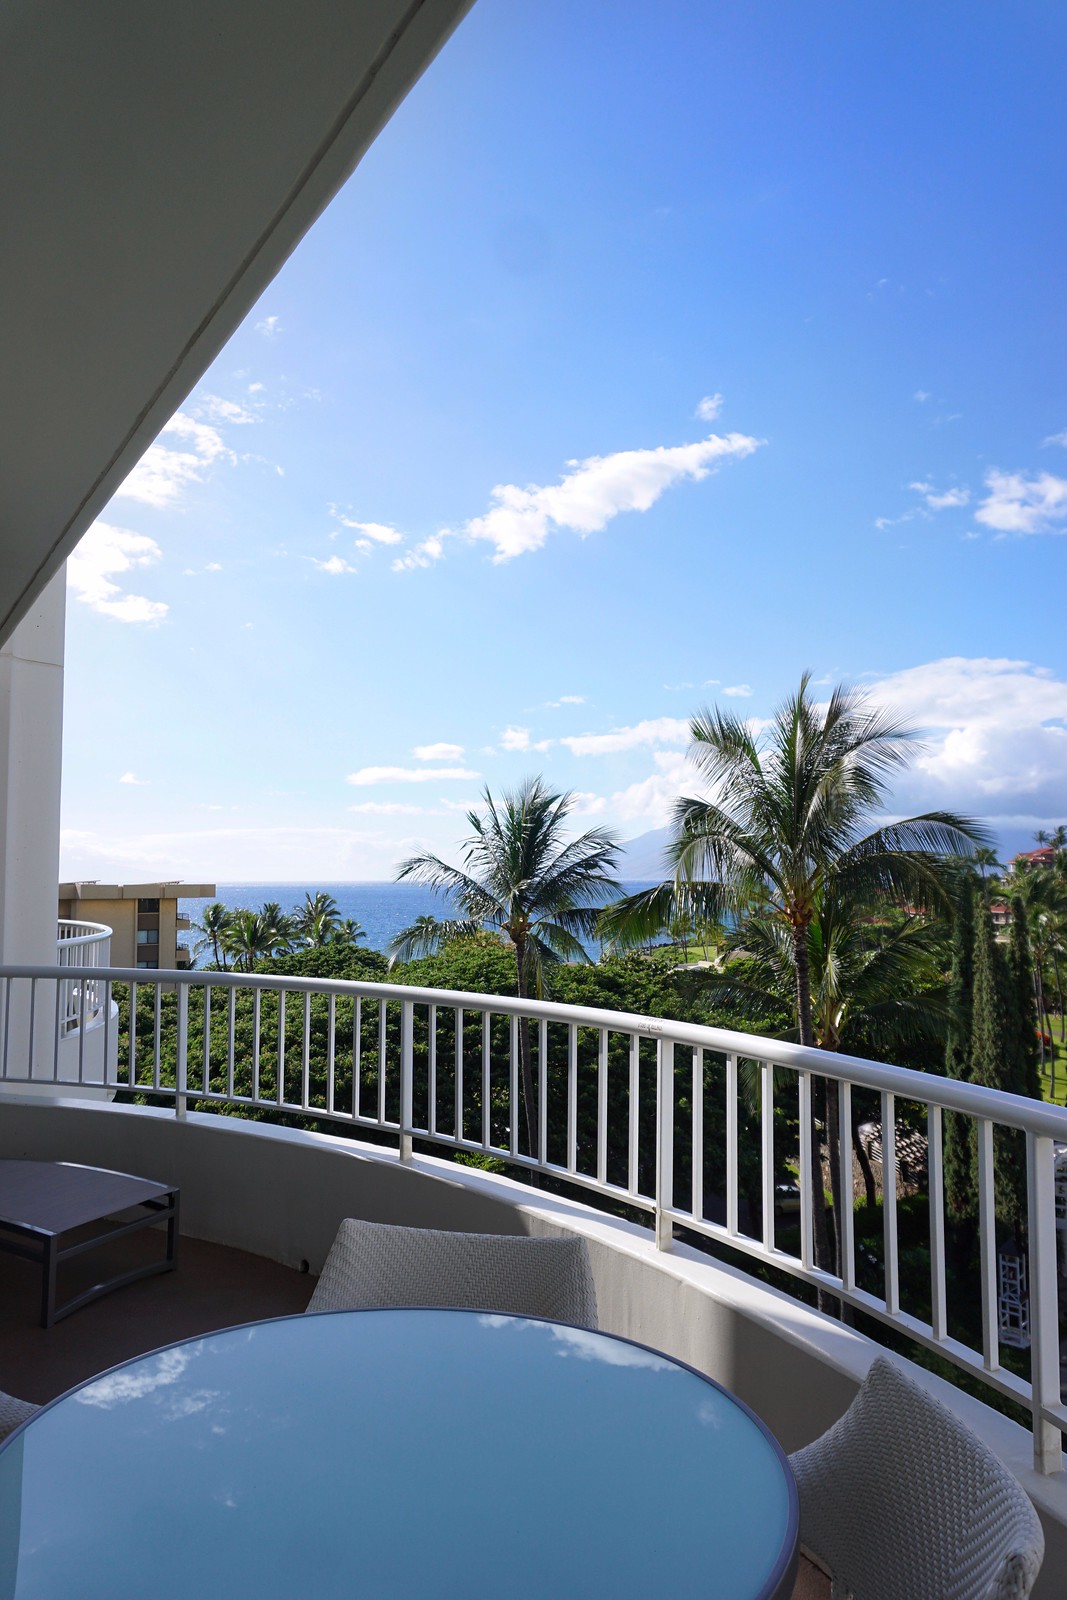 Balcony View Hotel Room Tour Fairmont Kea Lani BEST Hotel in Maui Where to Stay on Maui Hawaii